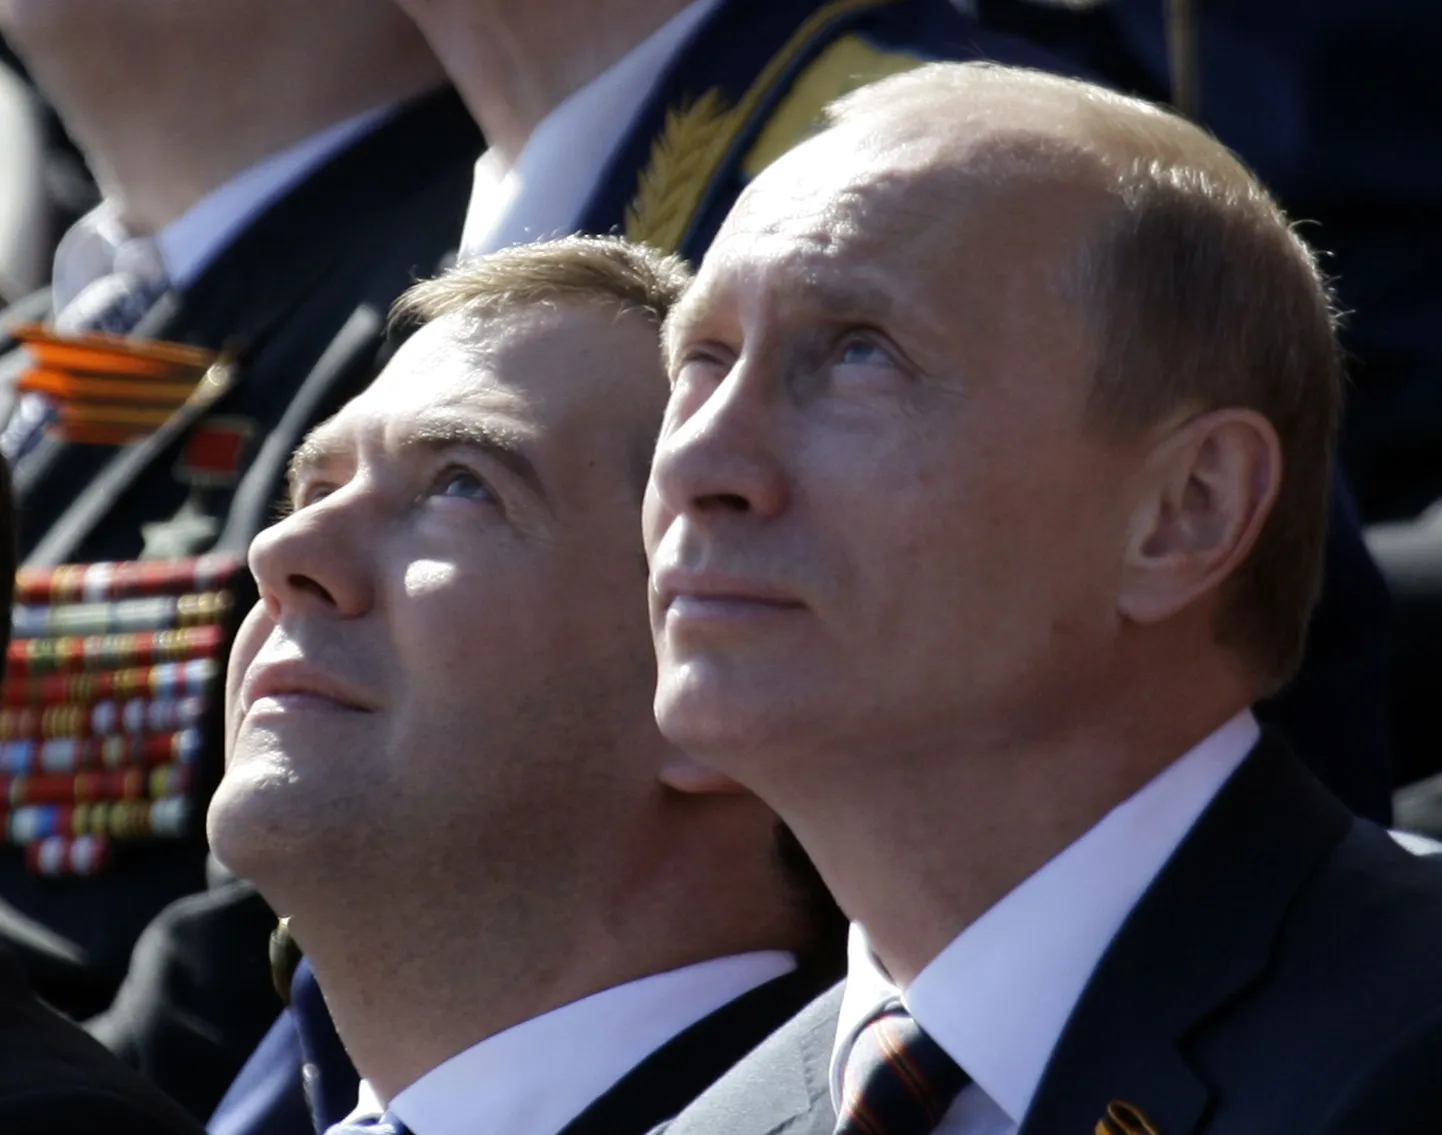 Vene Föderatsiooni president Dmitri Medvedev (vasakul) ja peaminister Vladimir Putin.